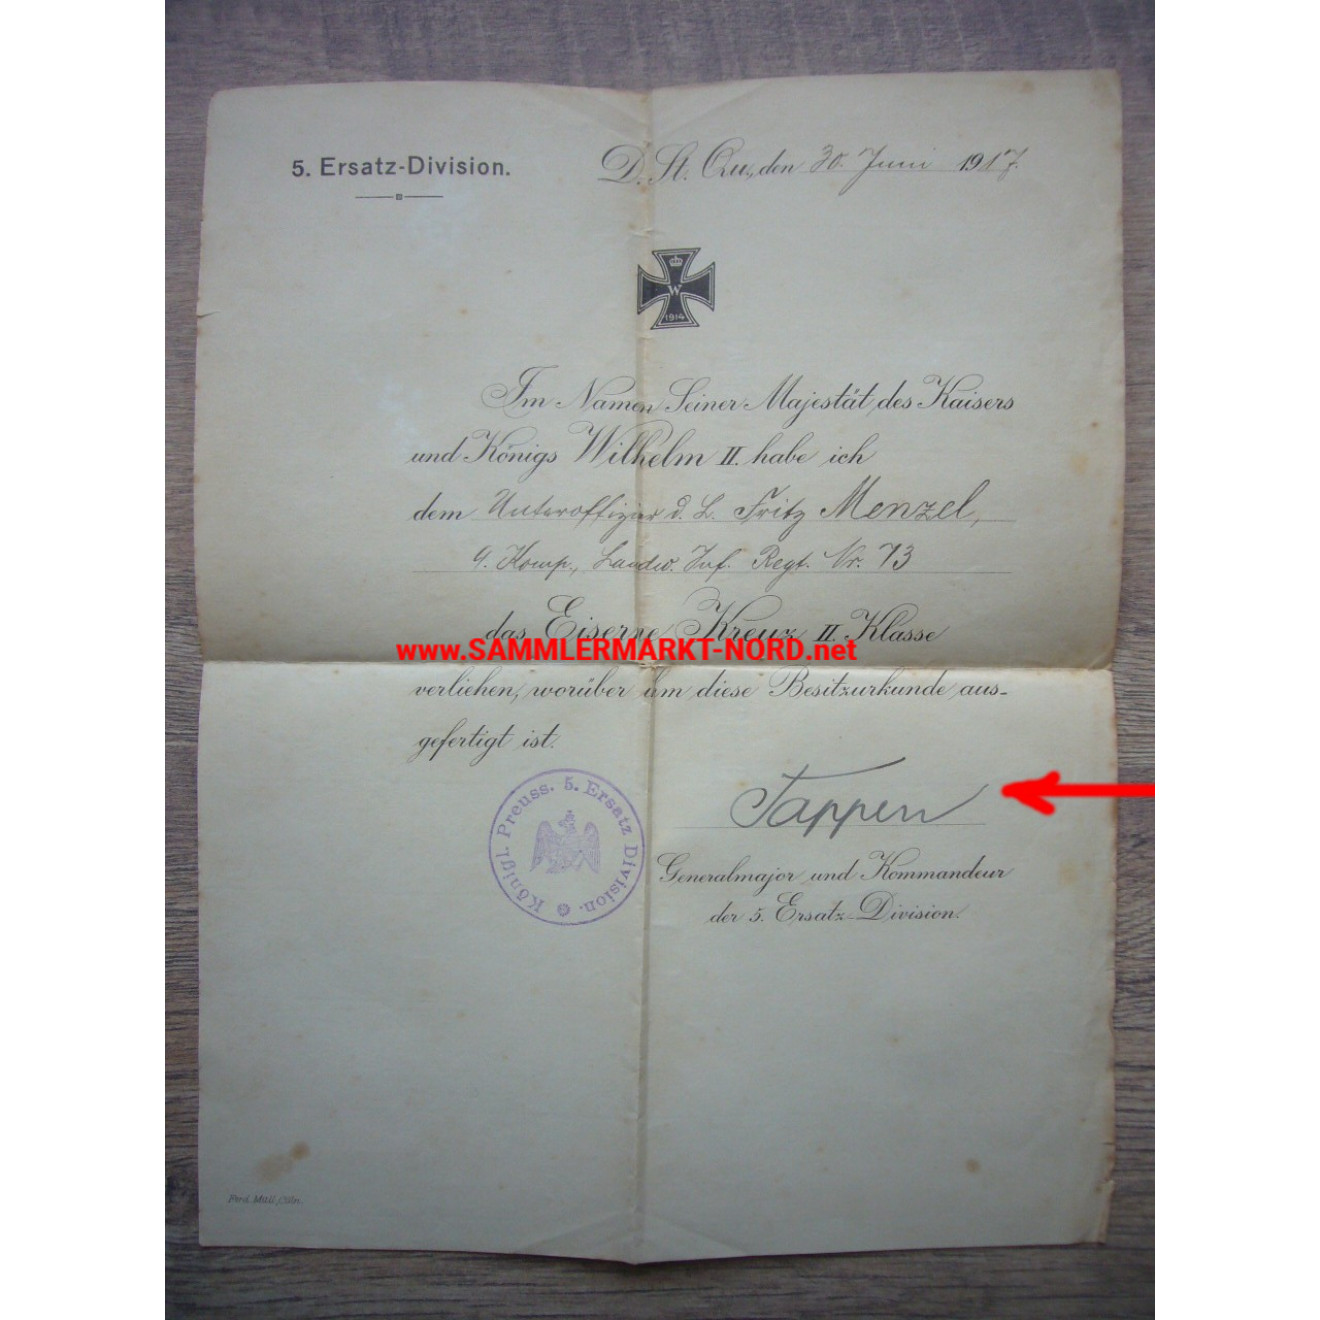 Iron Cross Certificate - Major General GERHARD TAPPEN (Pour le Merite) - 5. Reserve Division